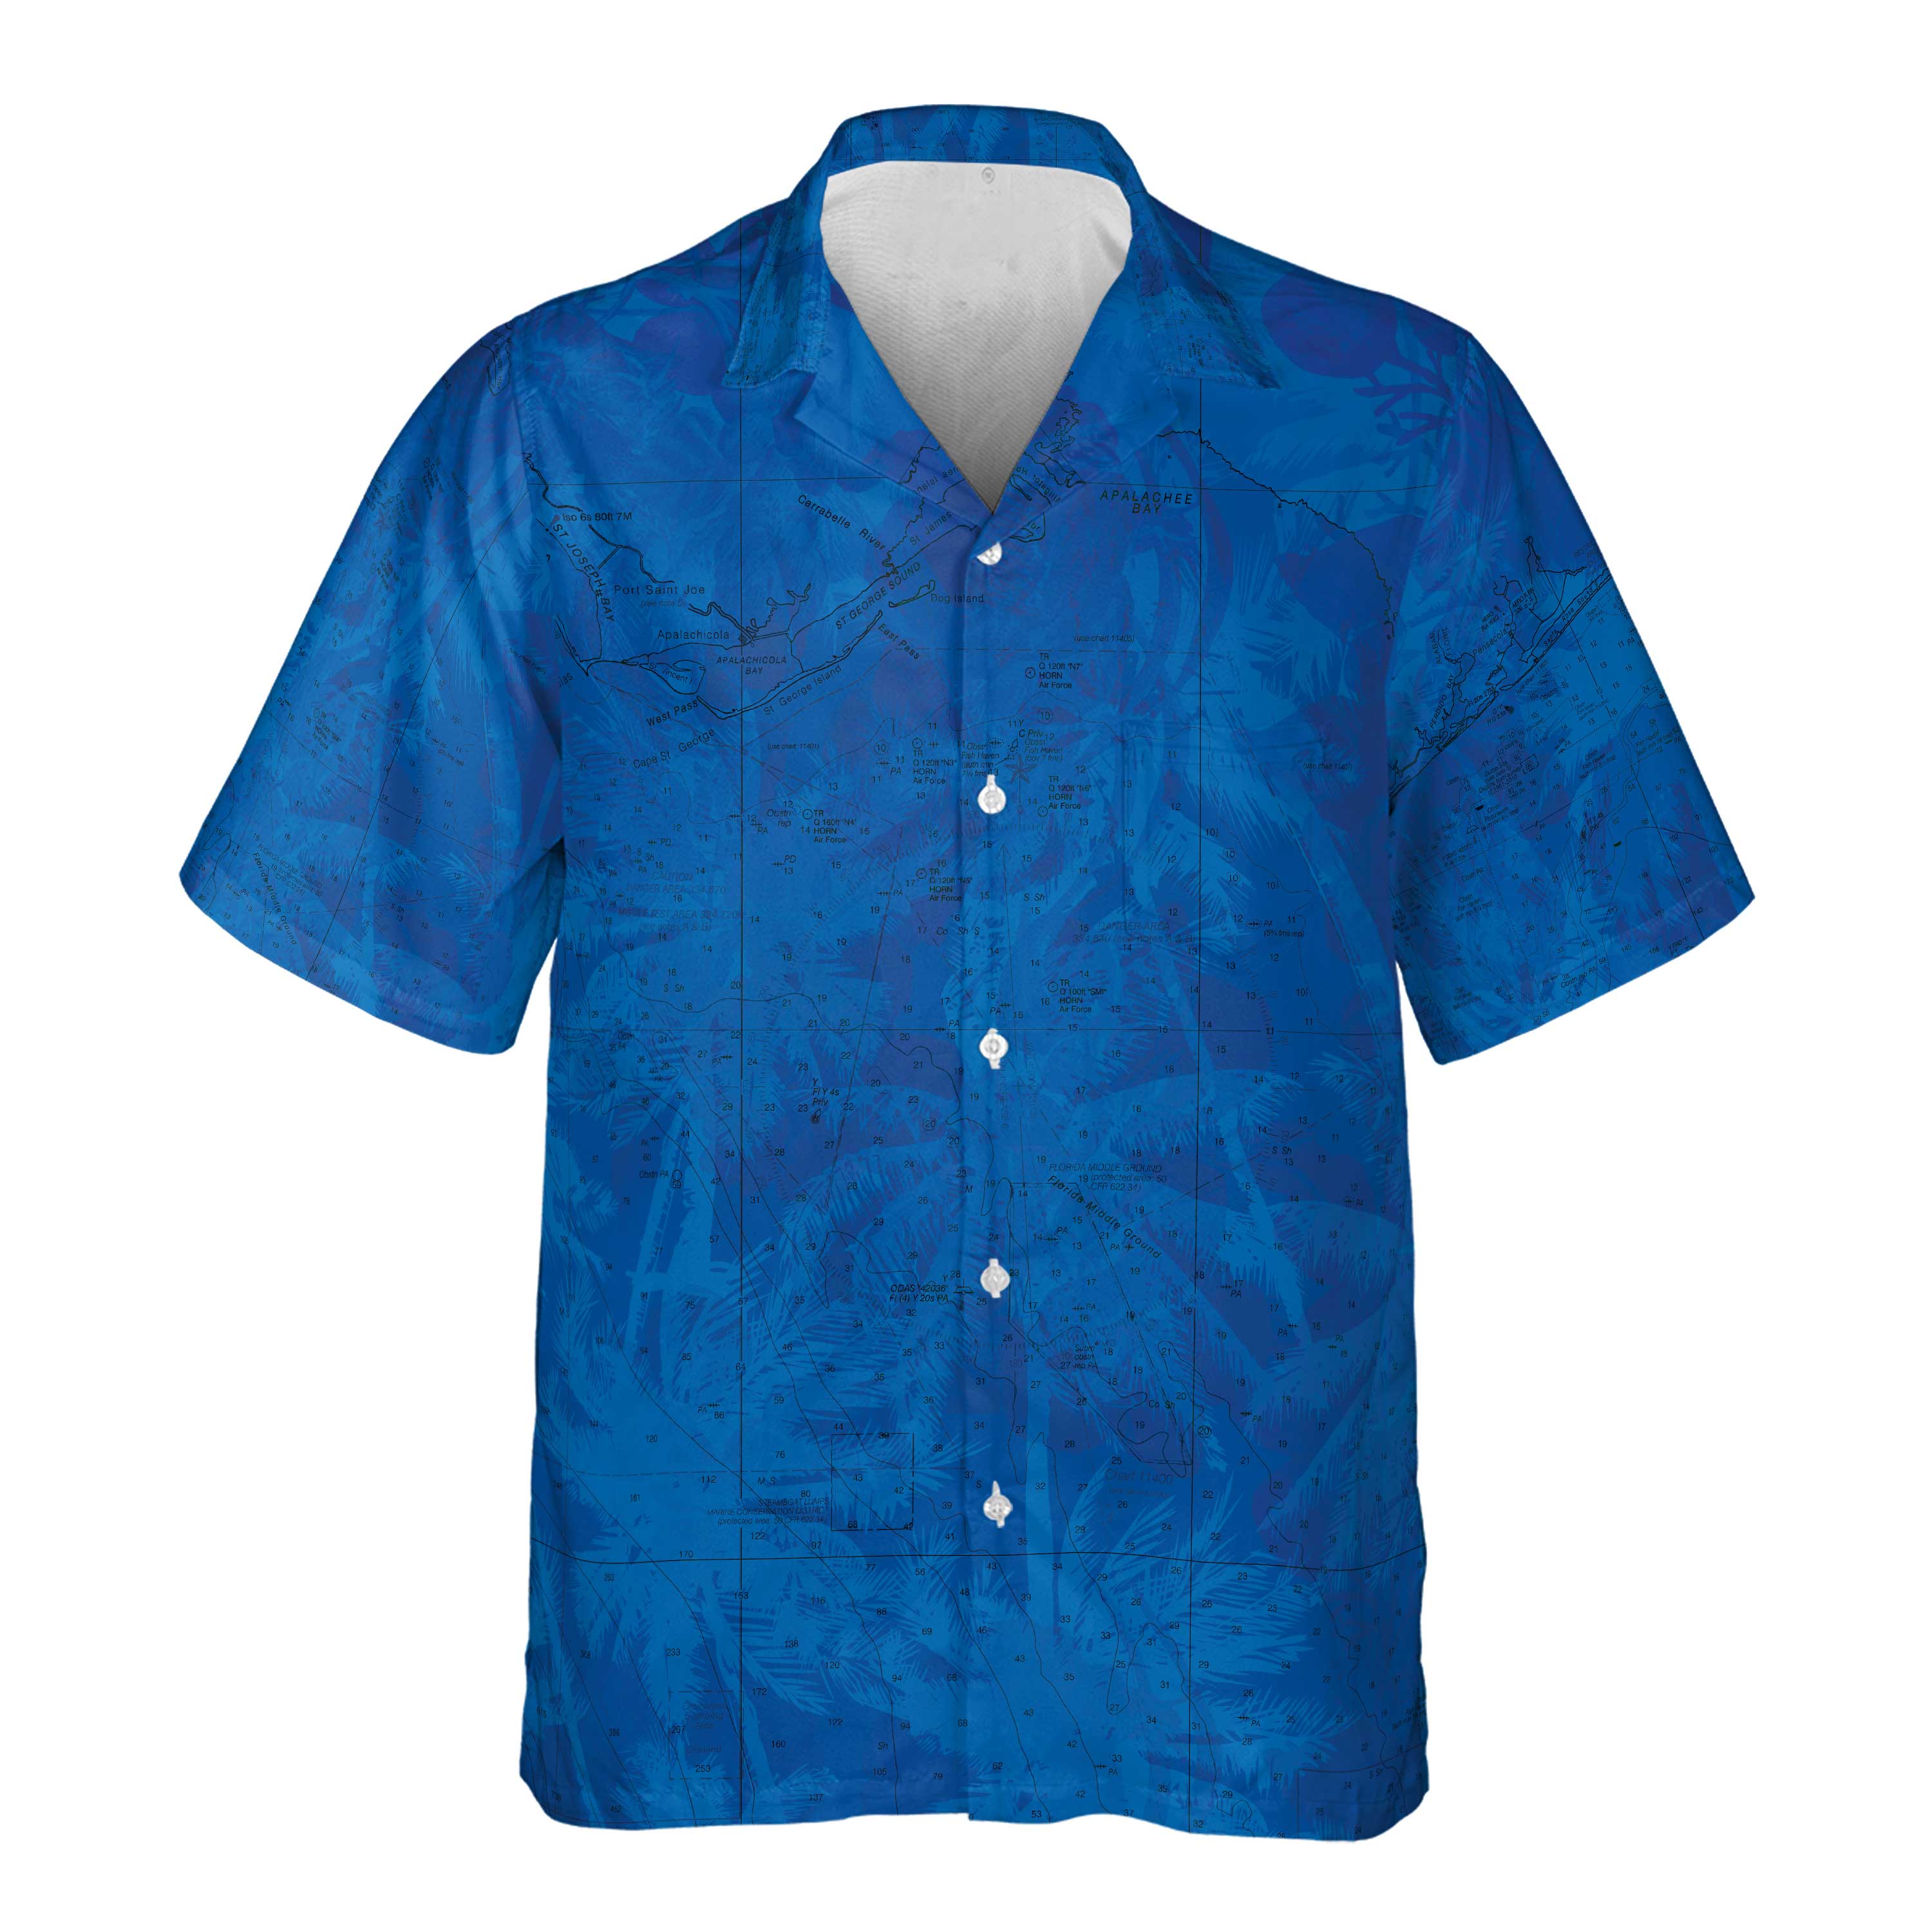 The Emerald Coast Blue Palm Floral Pocket Shirt